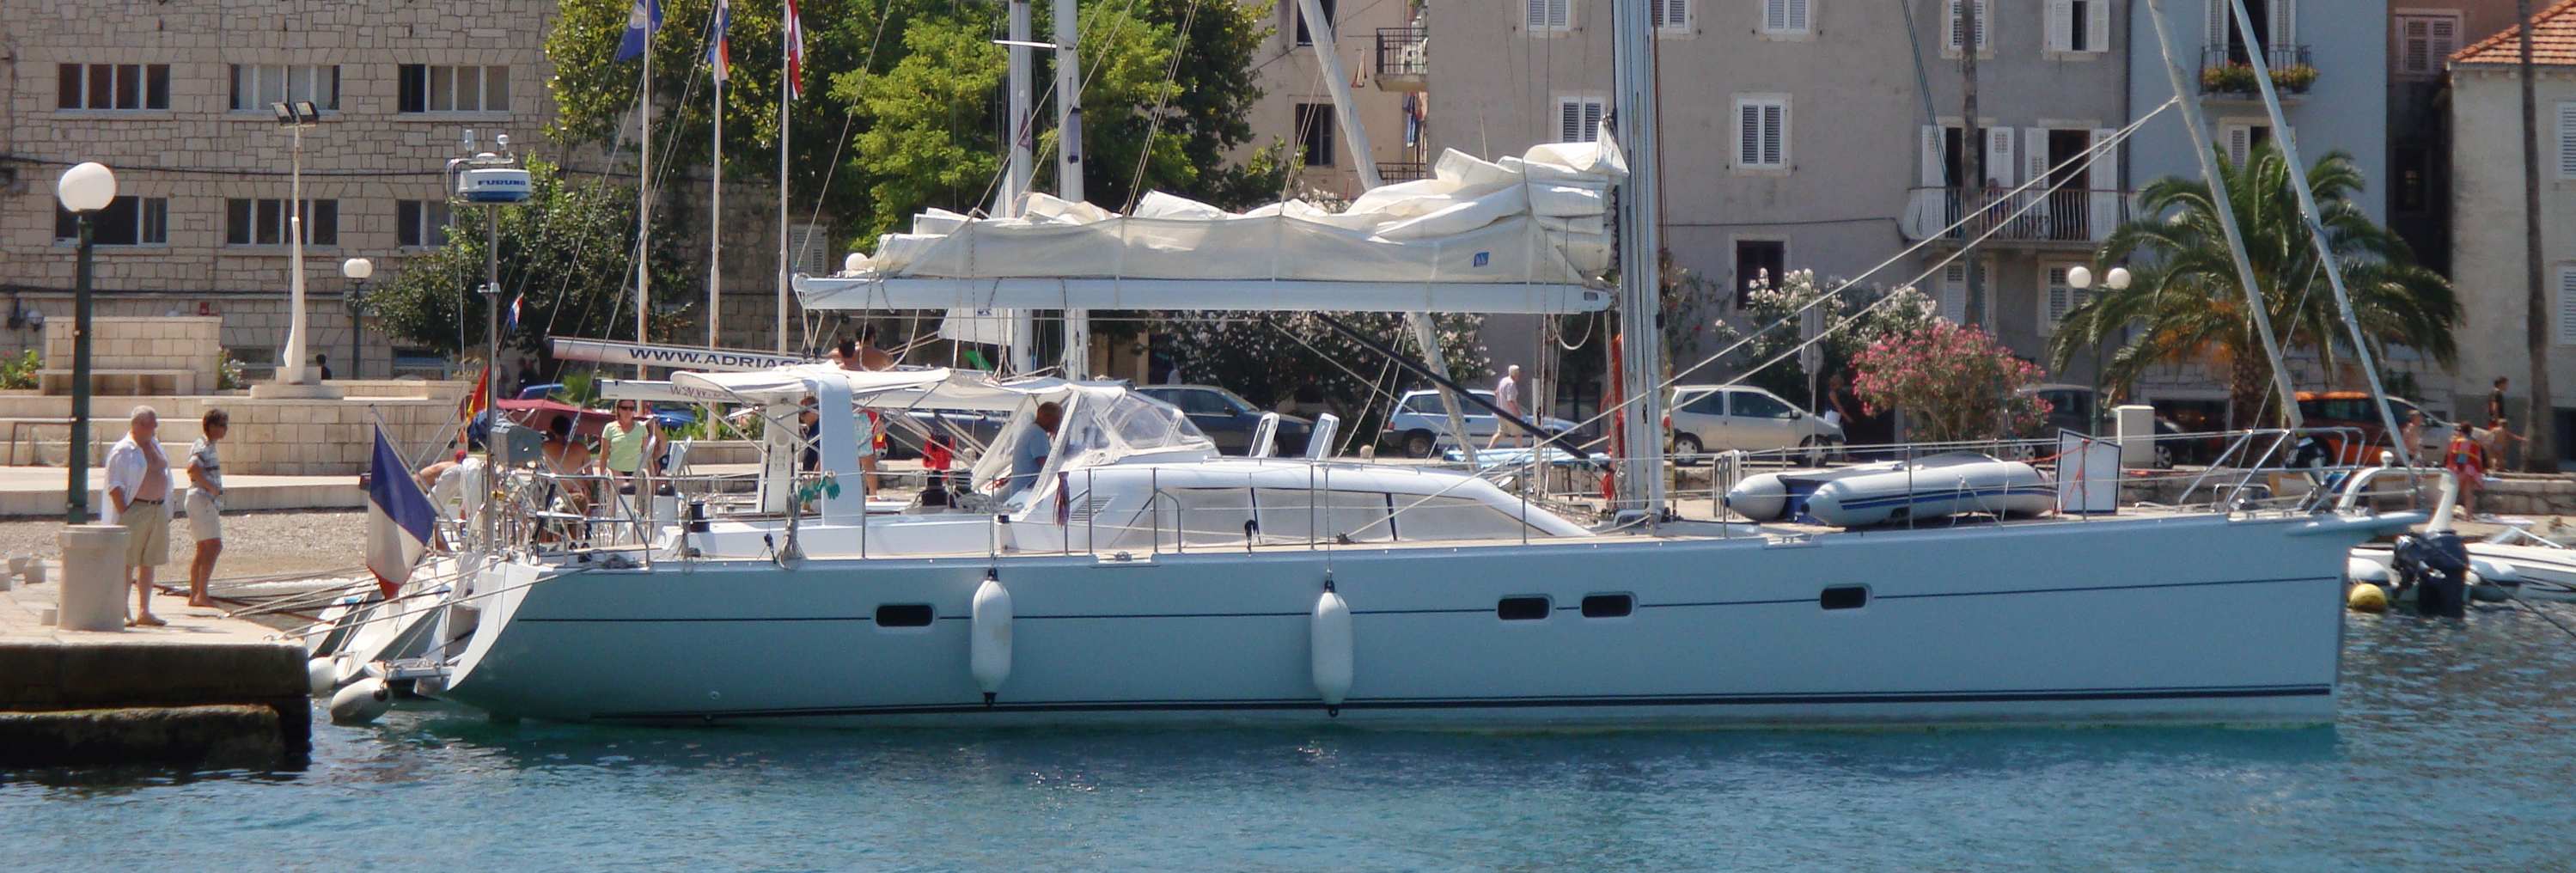 Sailing Yacht Alliage SWEET LIFE II : New Listing For Sale | BGYB